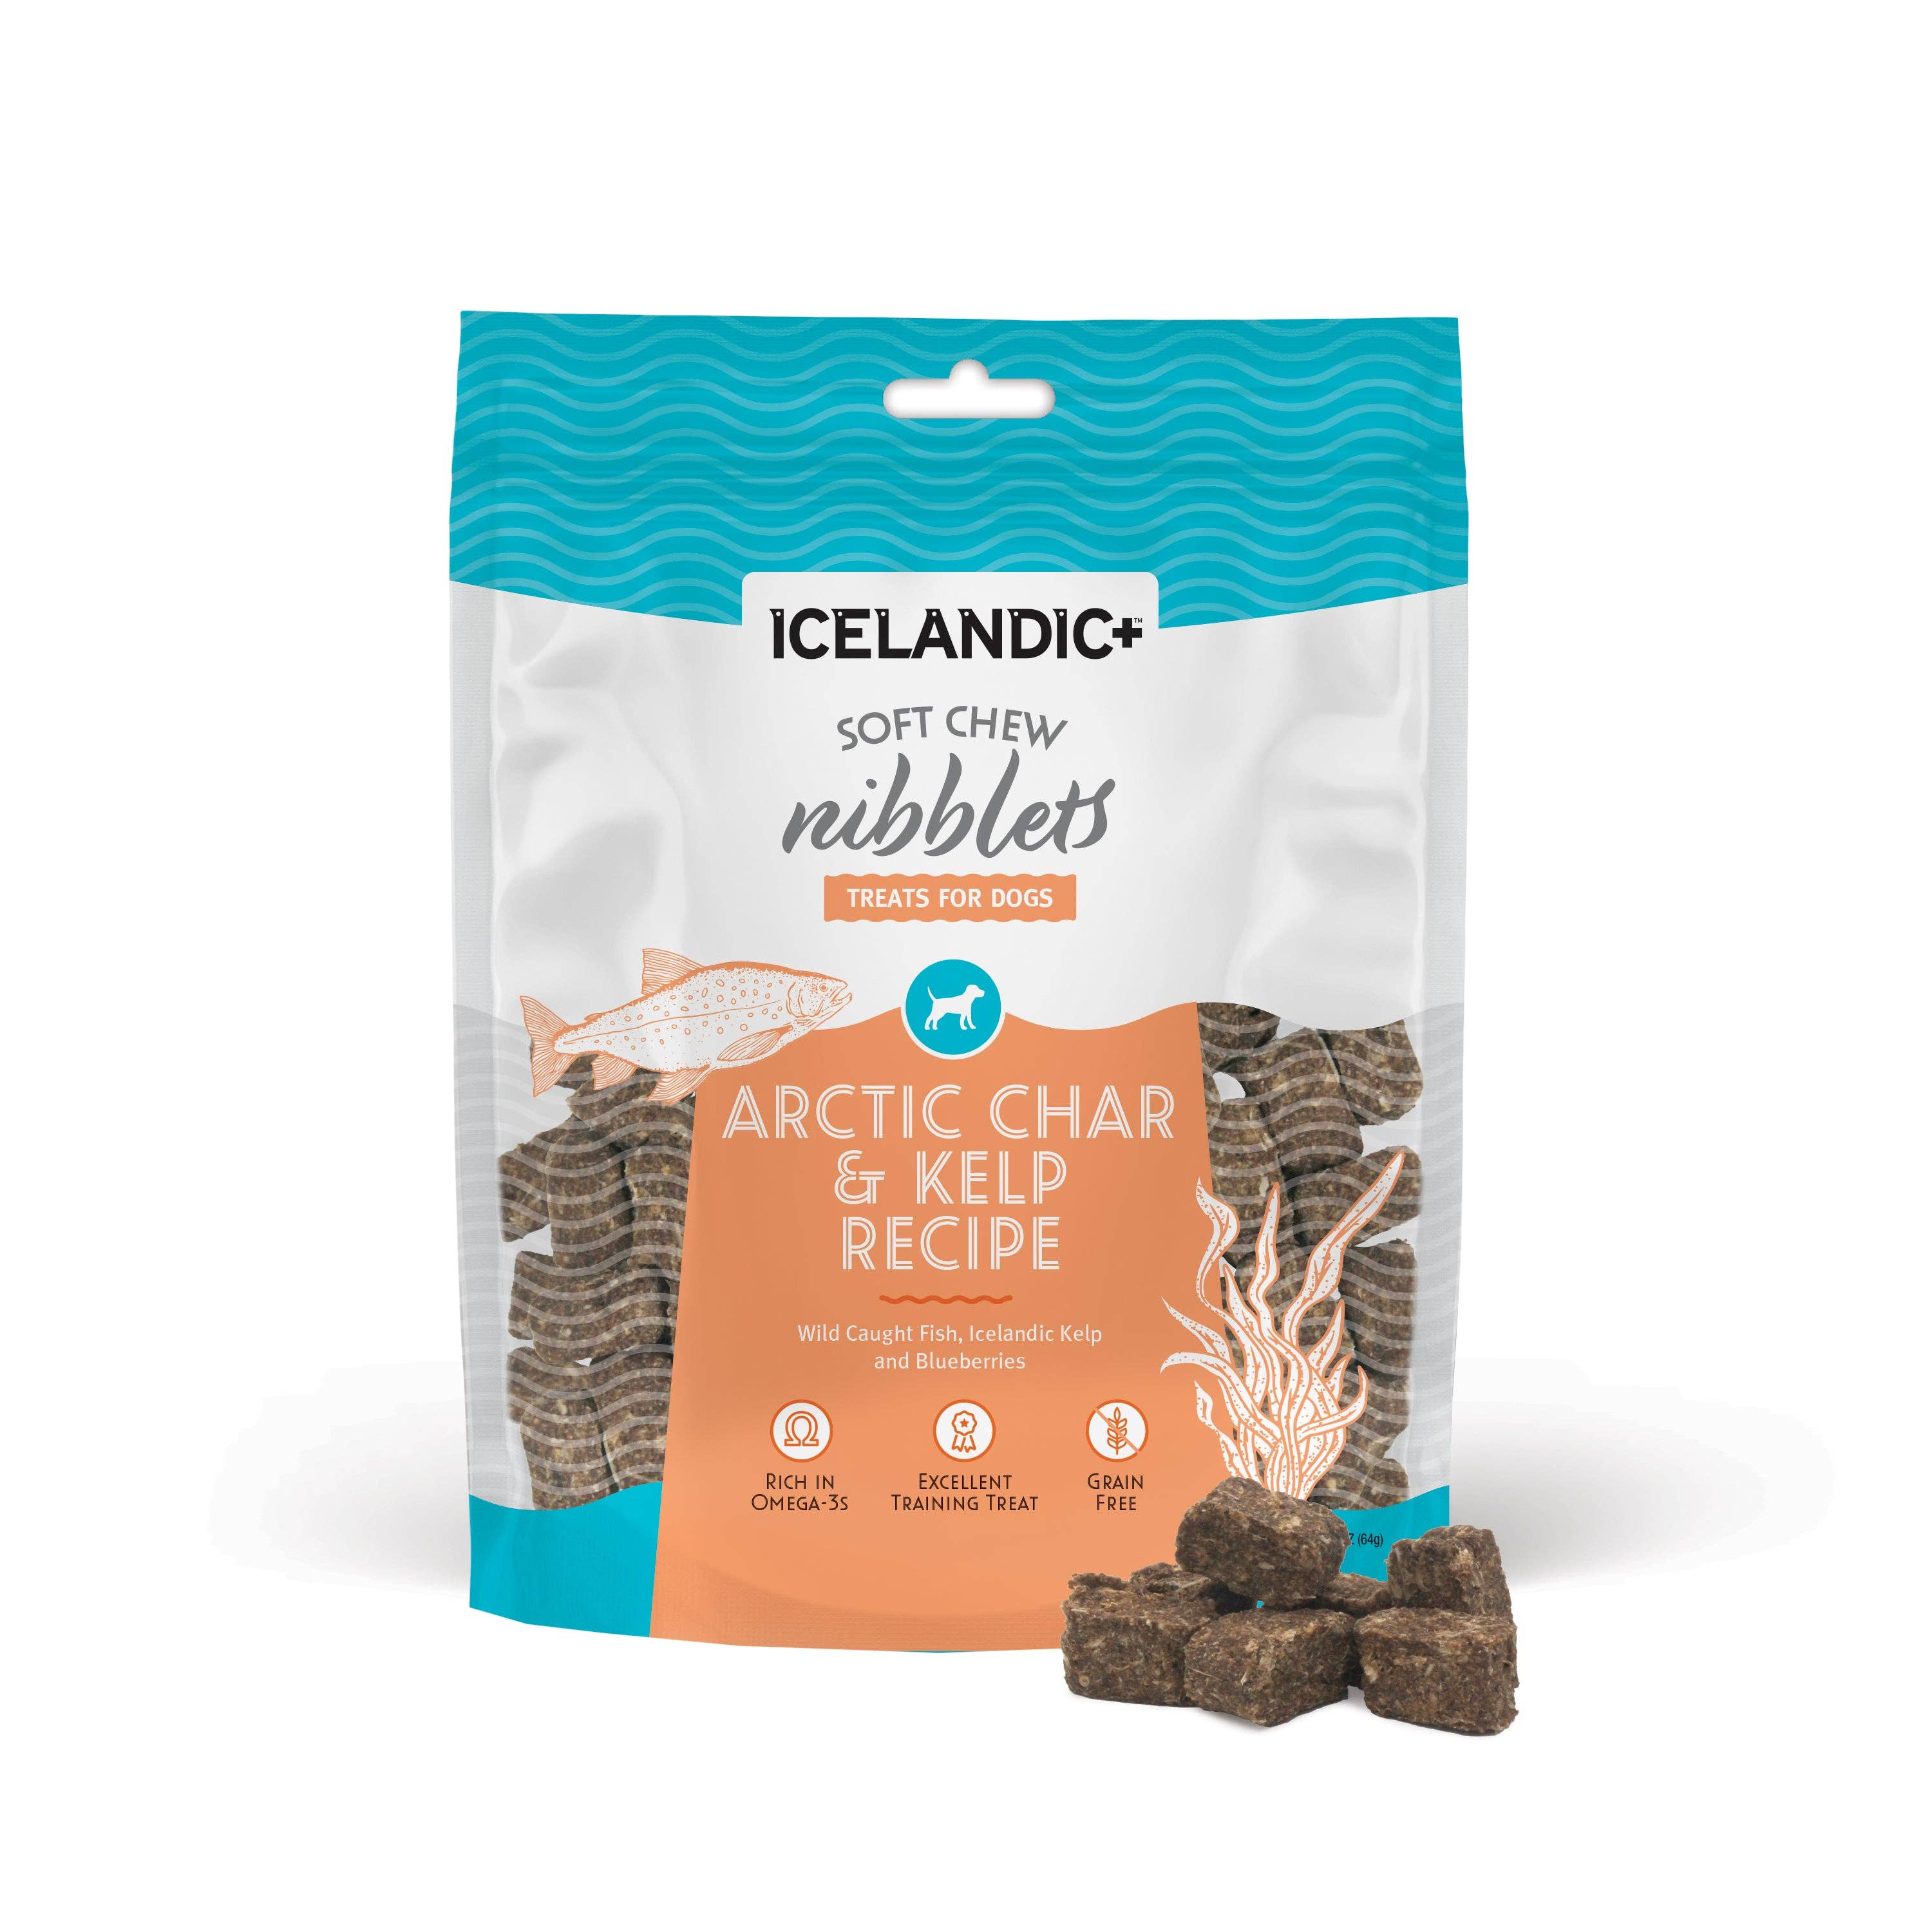 Icelandic+ Soft Chew Nibblets Arctic Char & Kelp Dog Treats